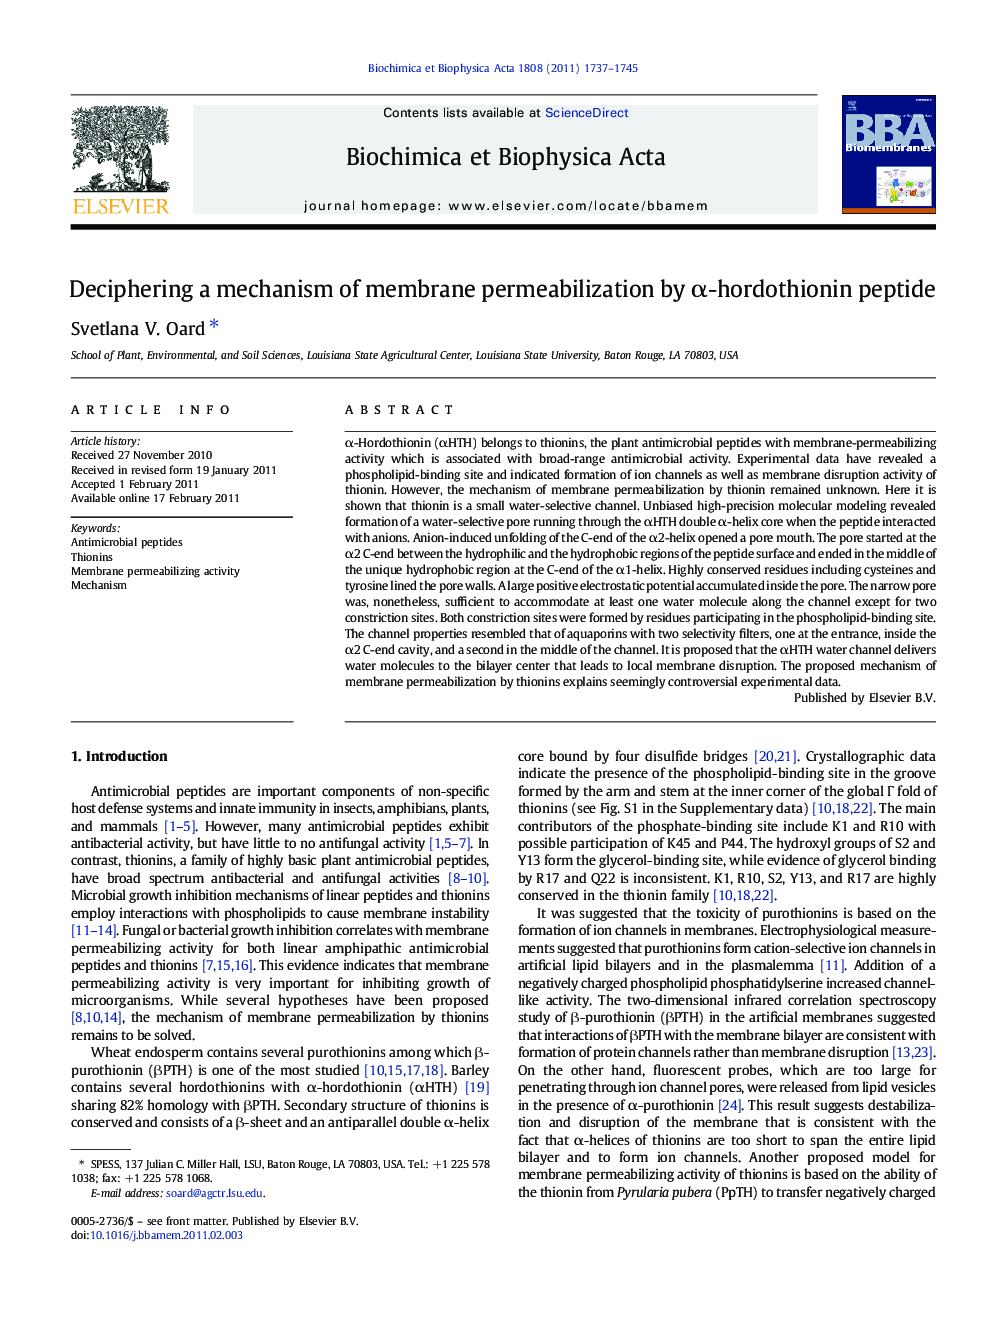 Deciphering a mechanism of membrane permeabilization by Î±-hordothionin peptide